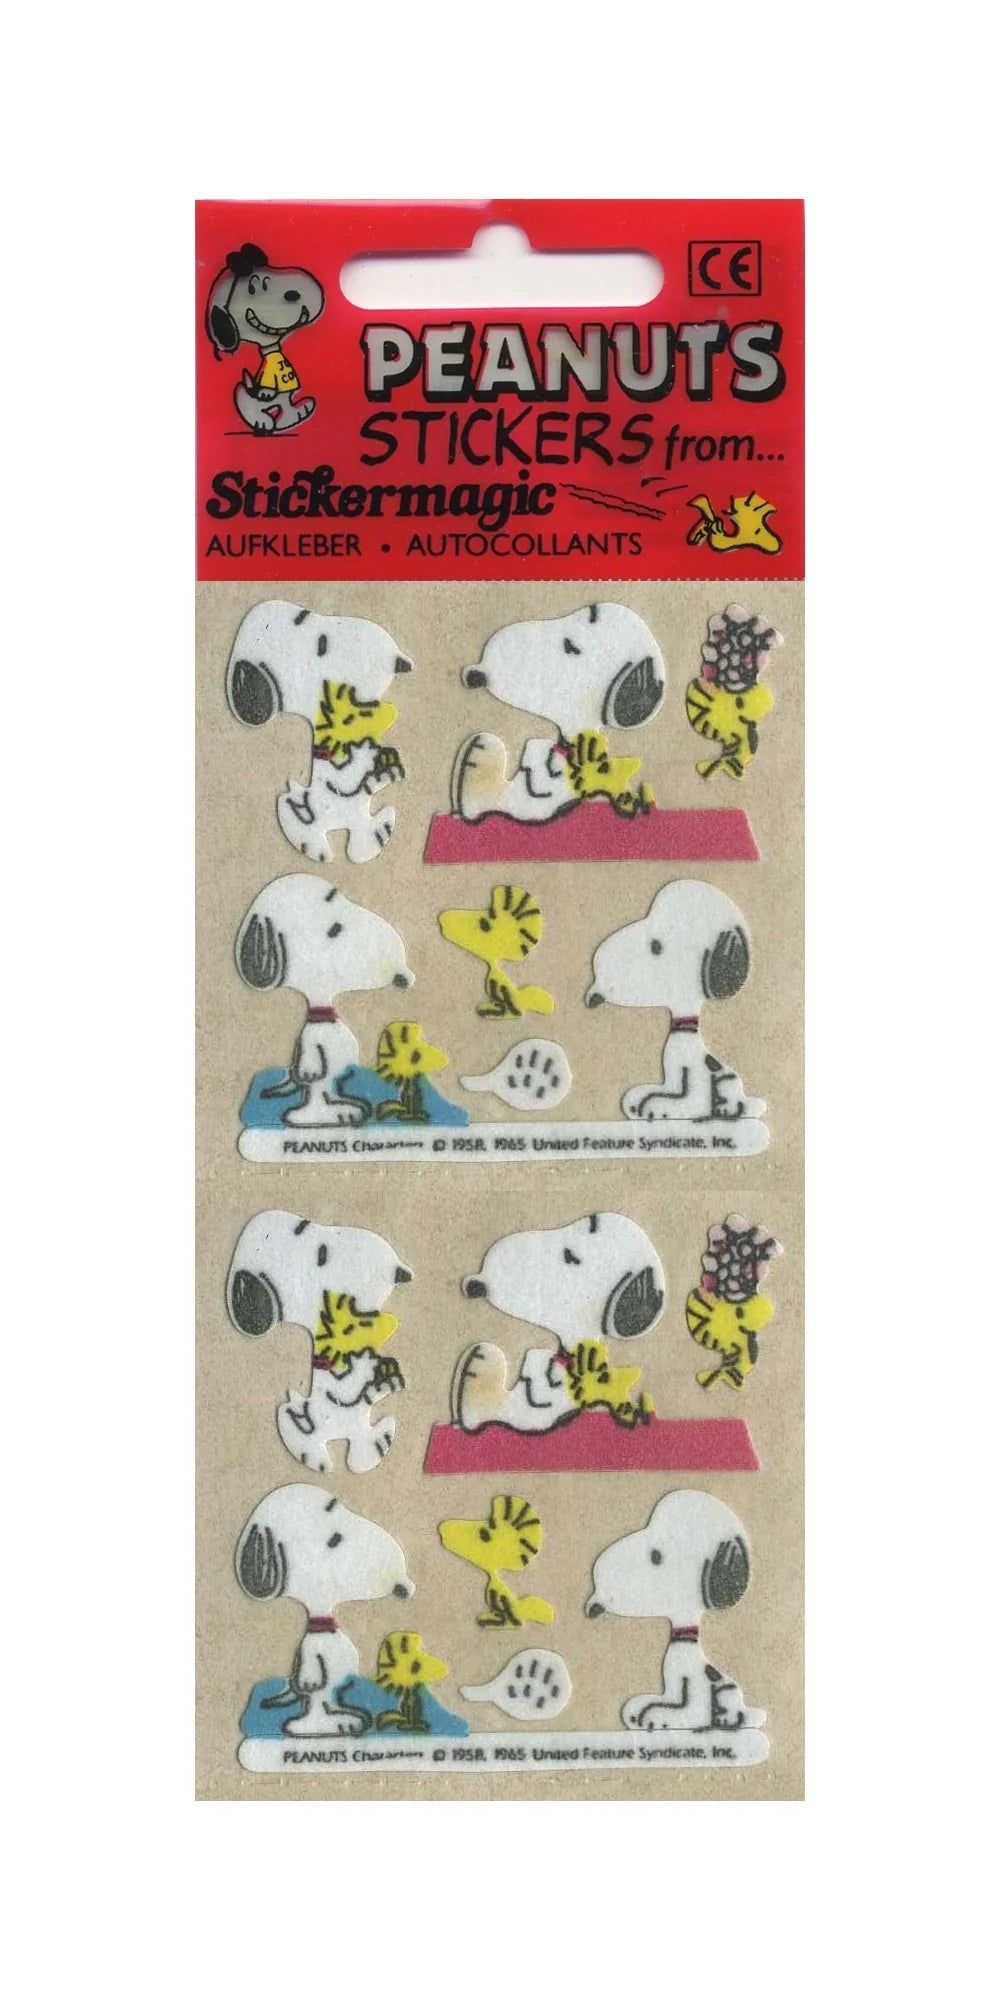 Snoopy Felt Stickers